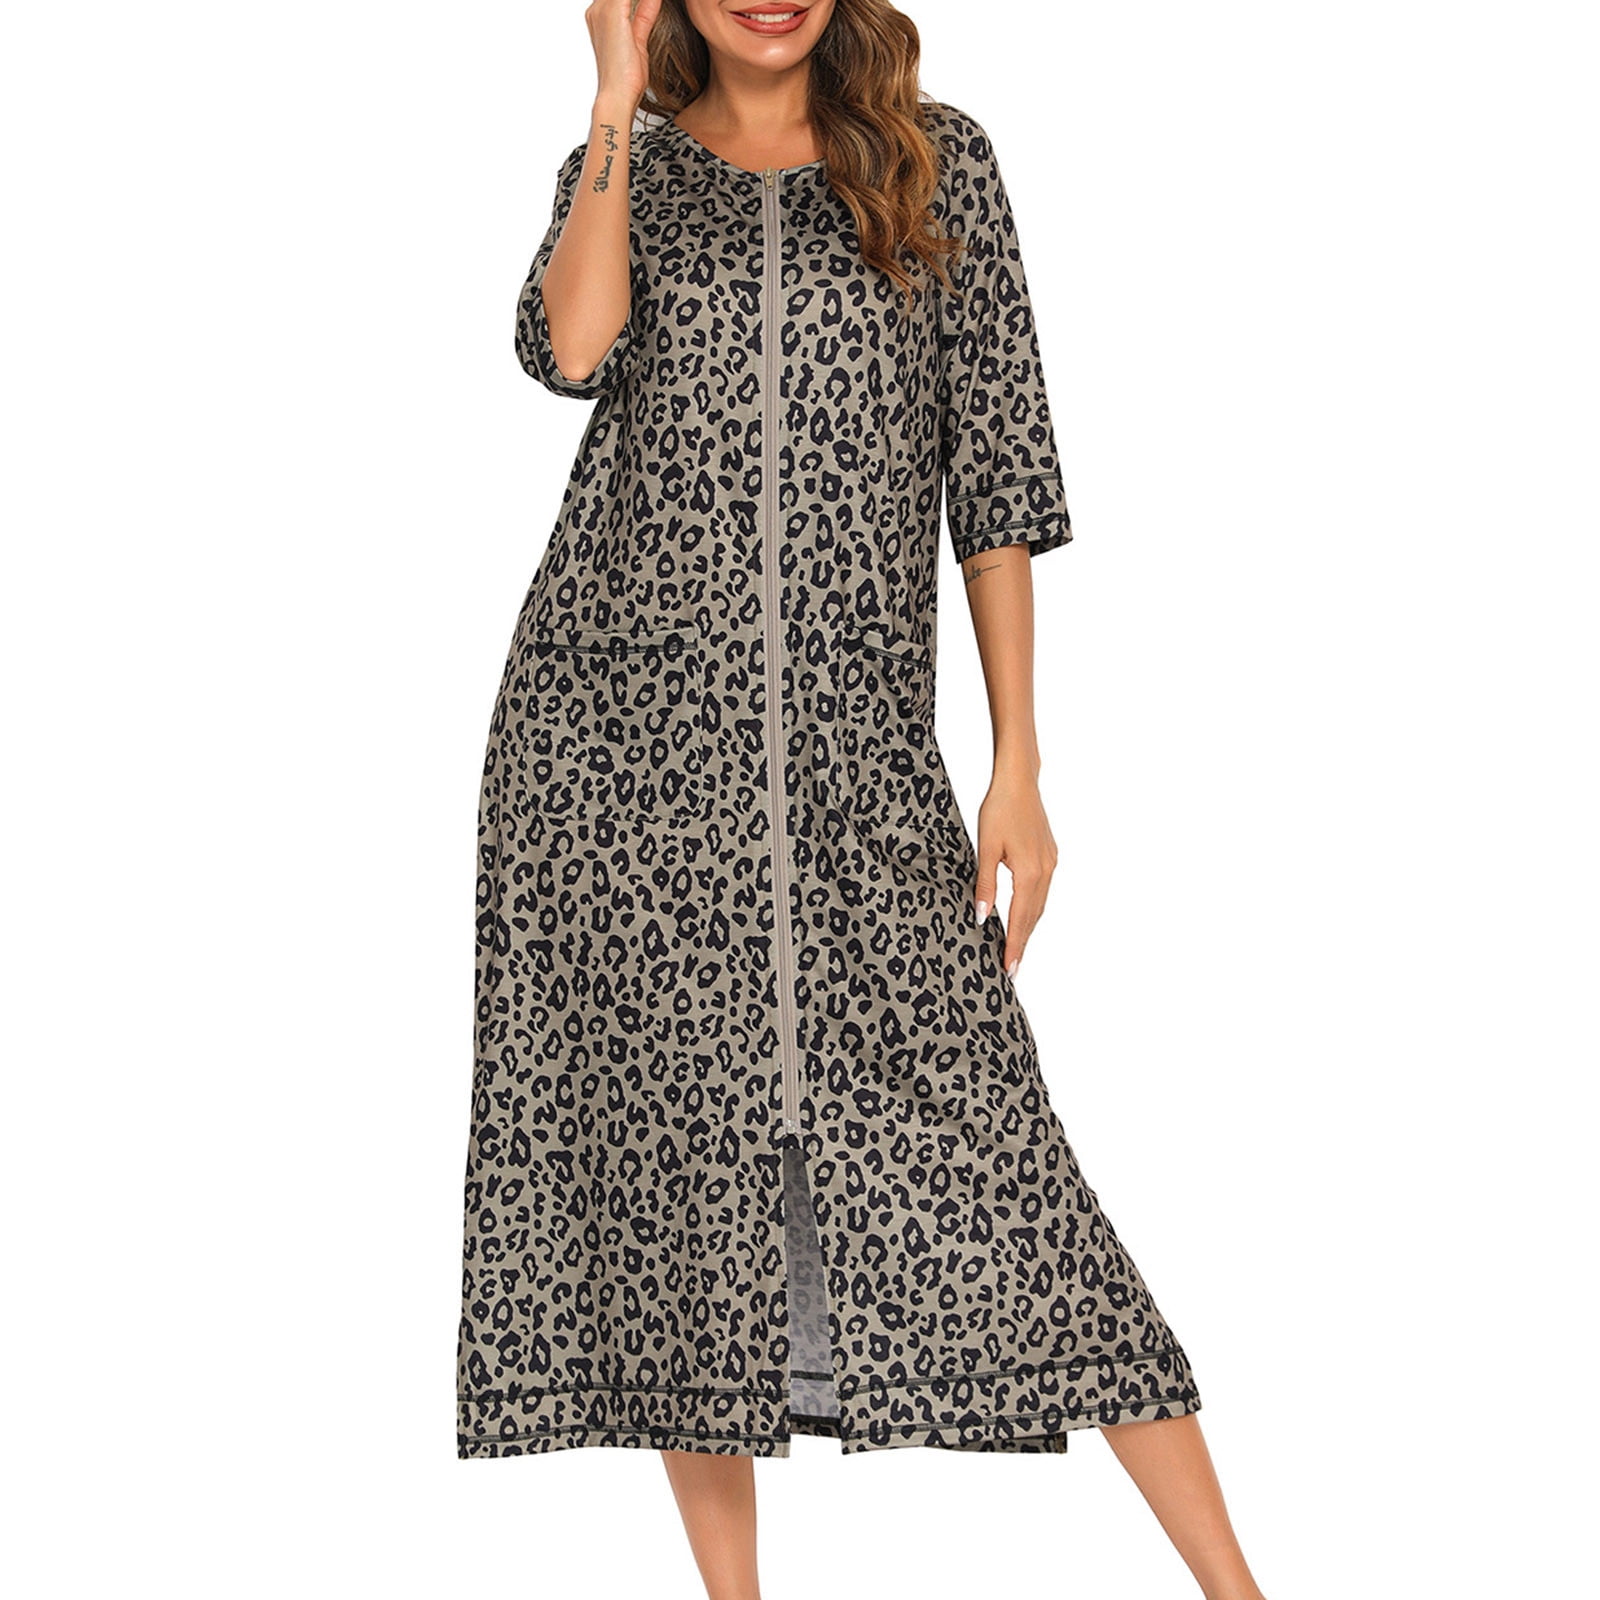 Pajamas for Women SHOPESSA Women's Winter Warm Nightgown Autumn And ...